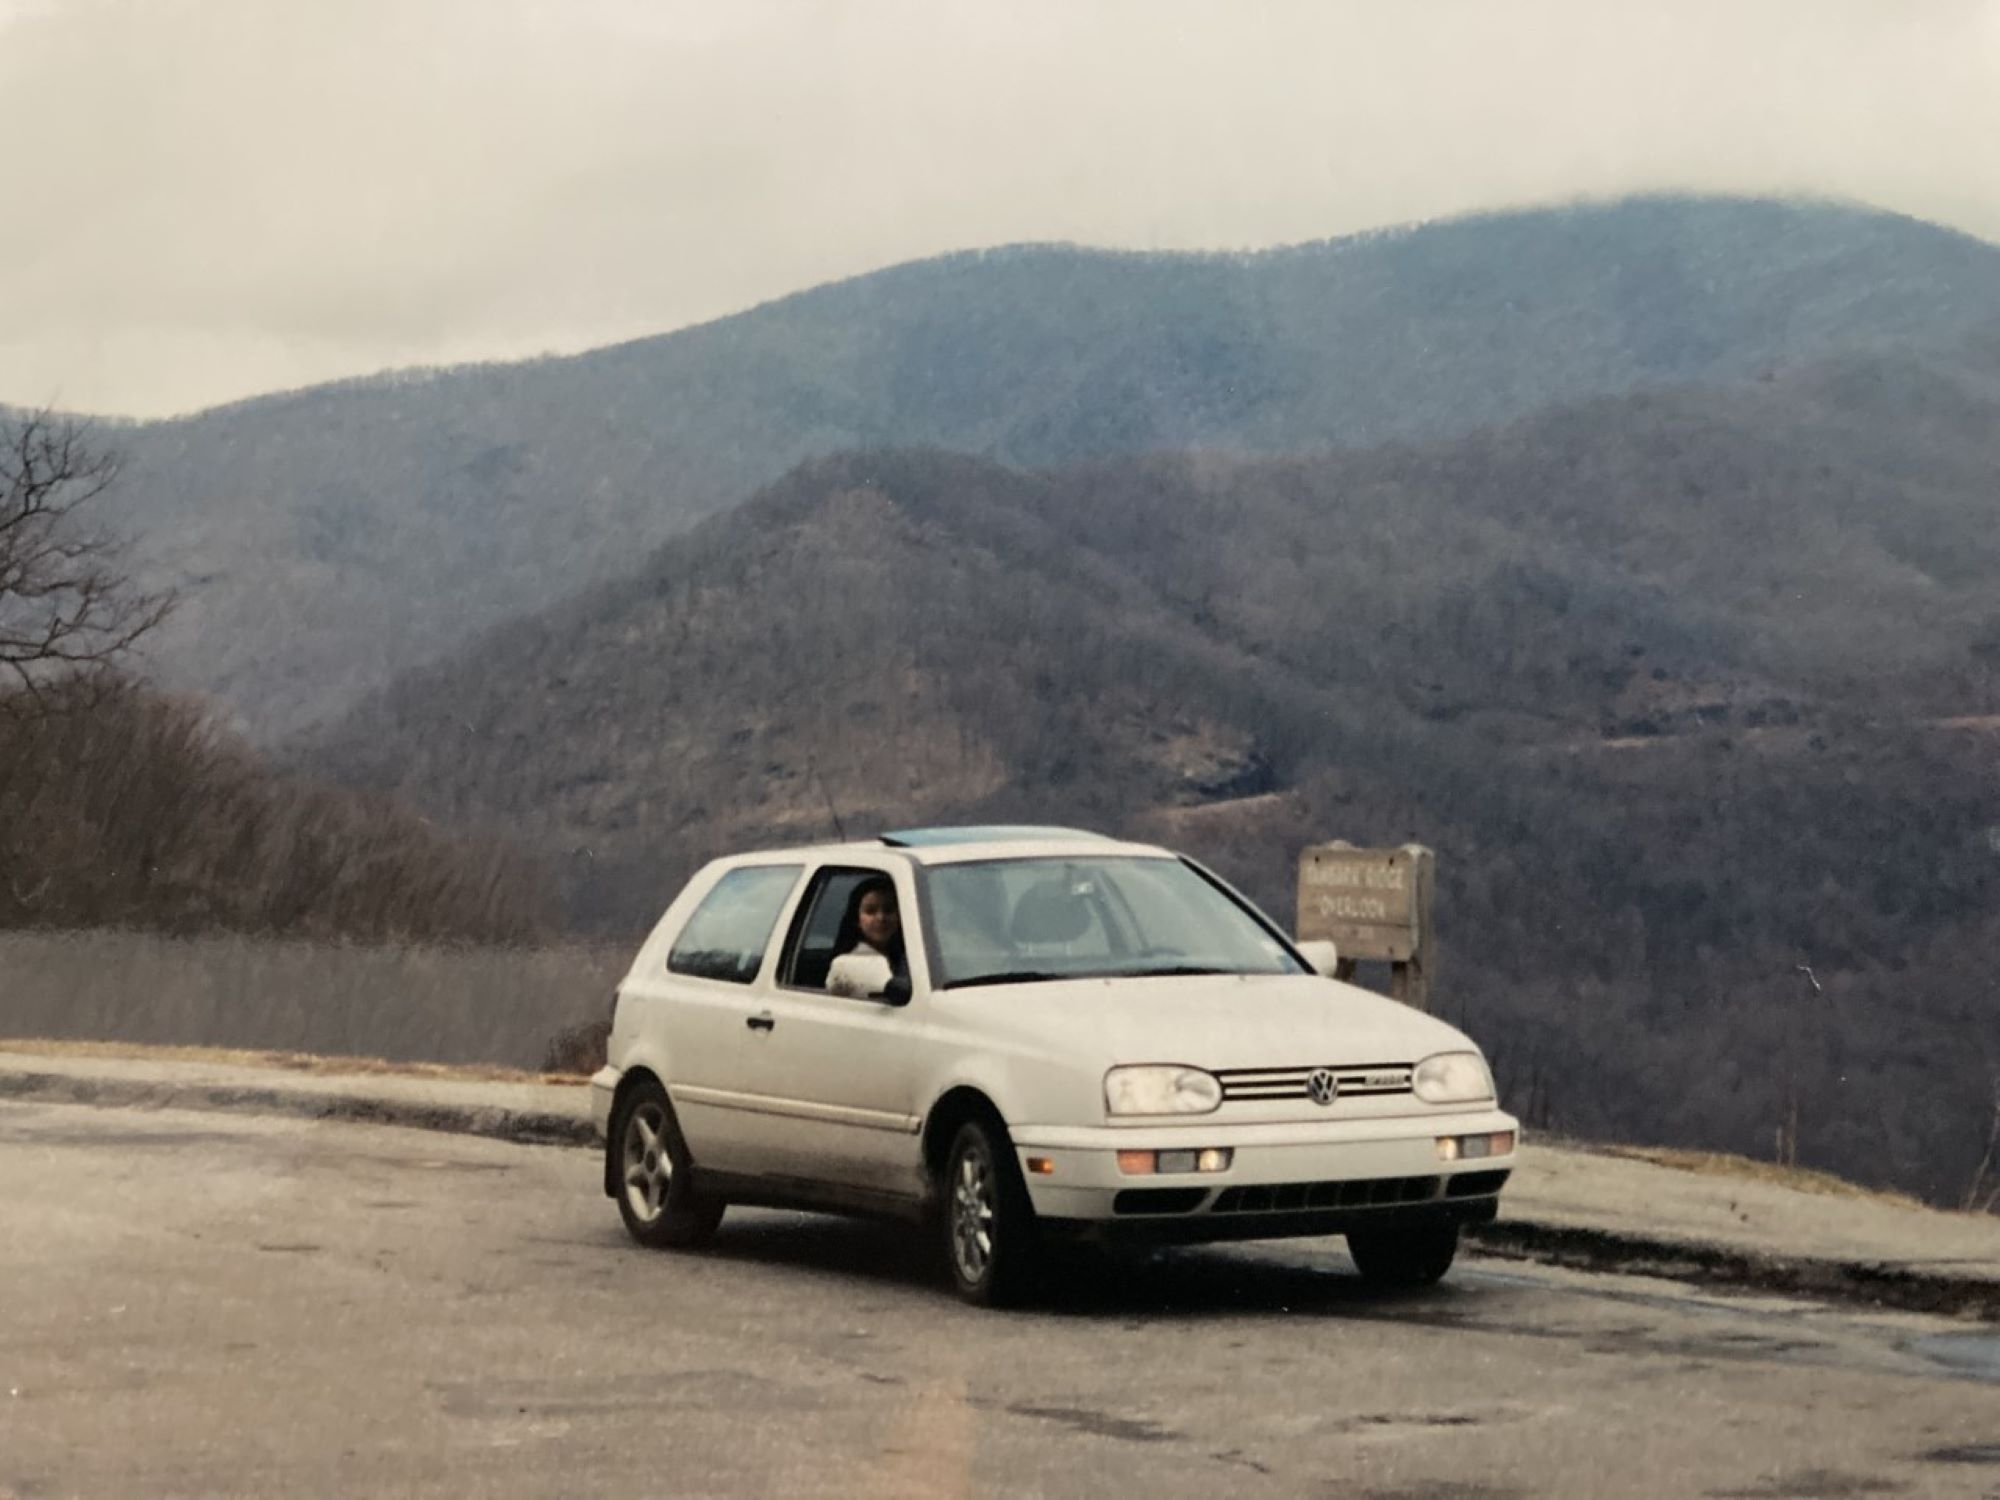 A 1995 Volkswagen Golf GTI model parked near grassy hills